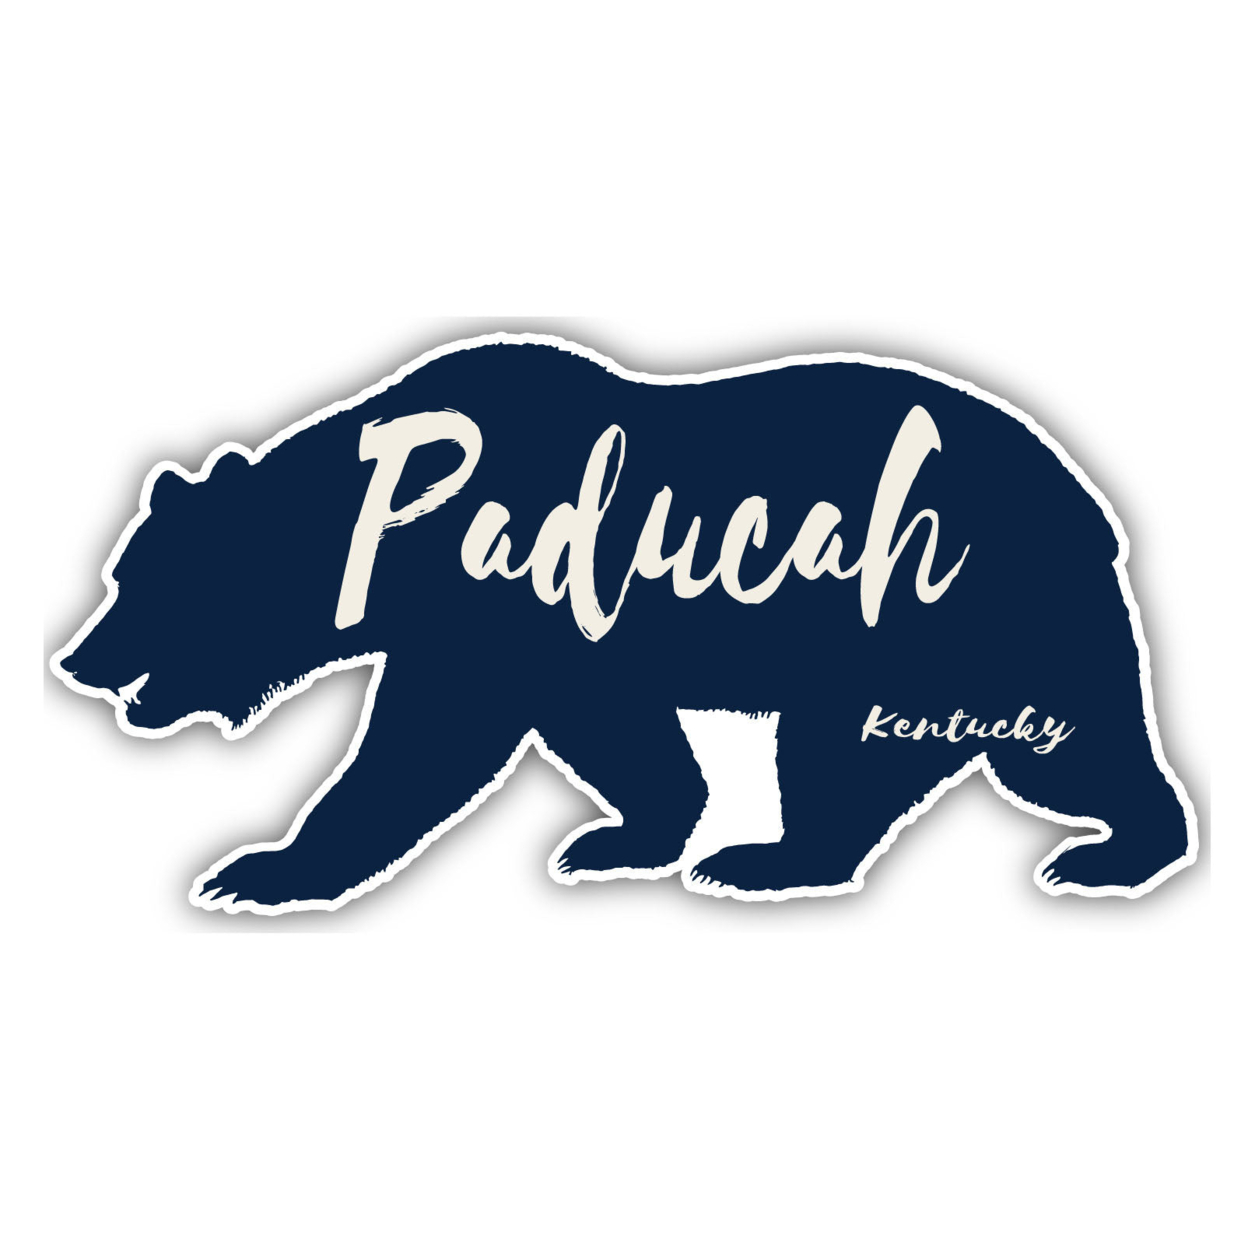 Paducah Kentucky Souvenir Decorative Stickers (Choose Theme And Size) - Single Unit, 4-Inch, Bear